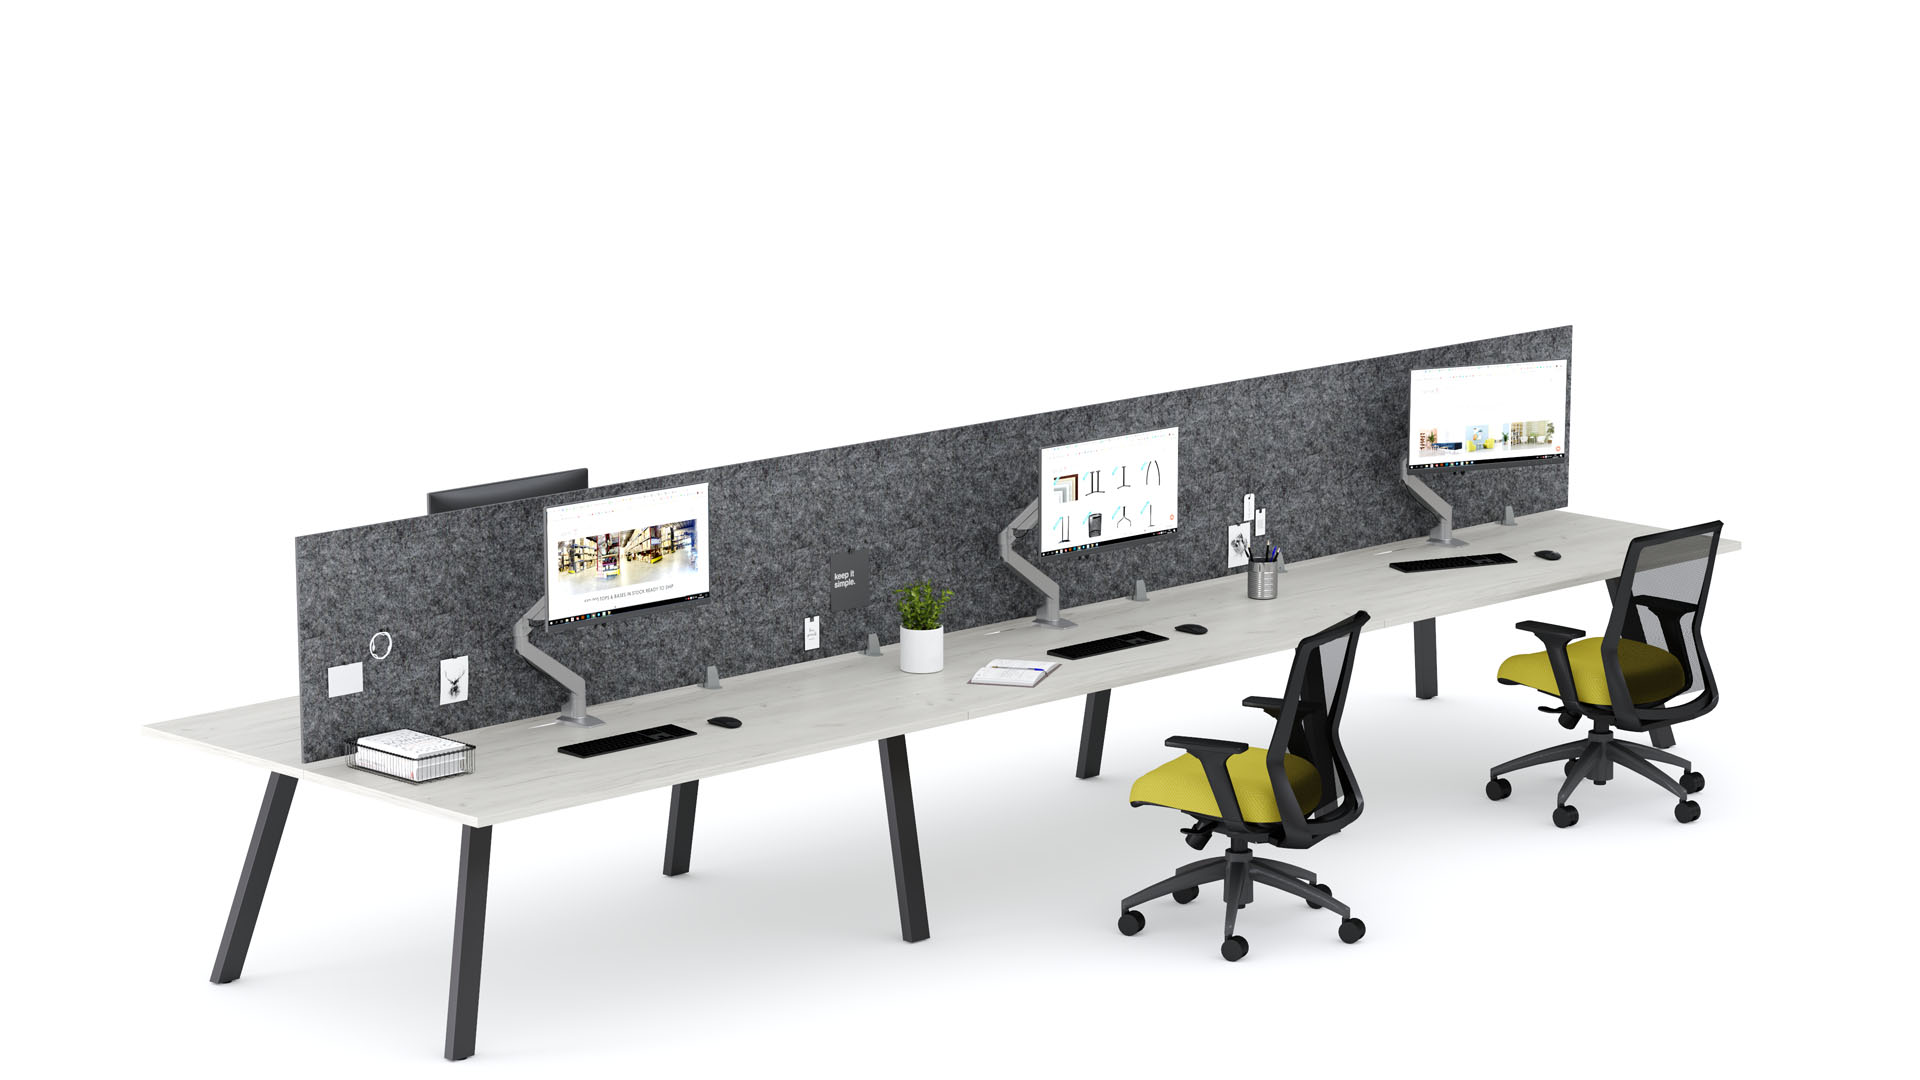 Aim XL EZ Desking with PET Screens